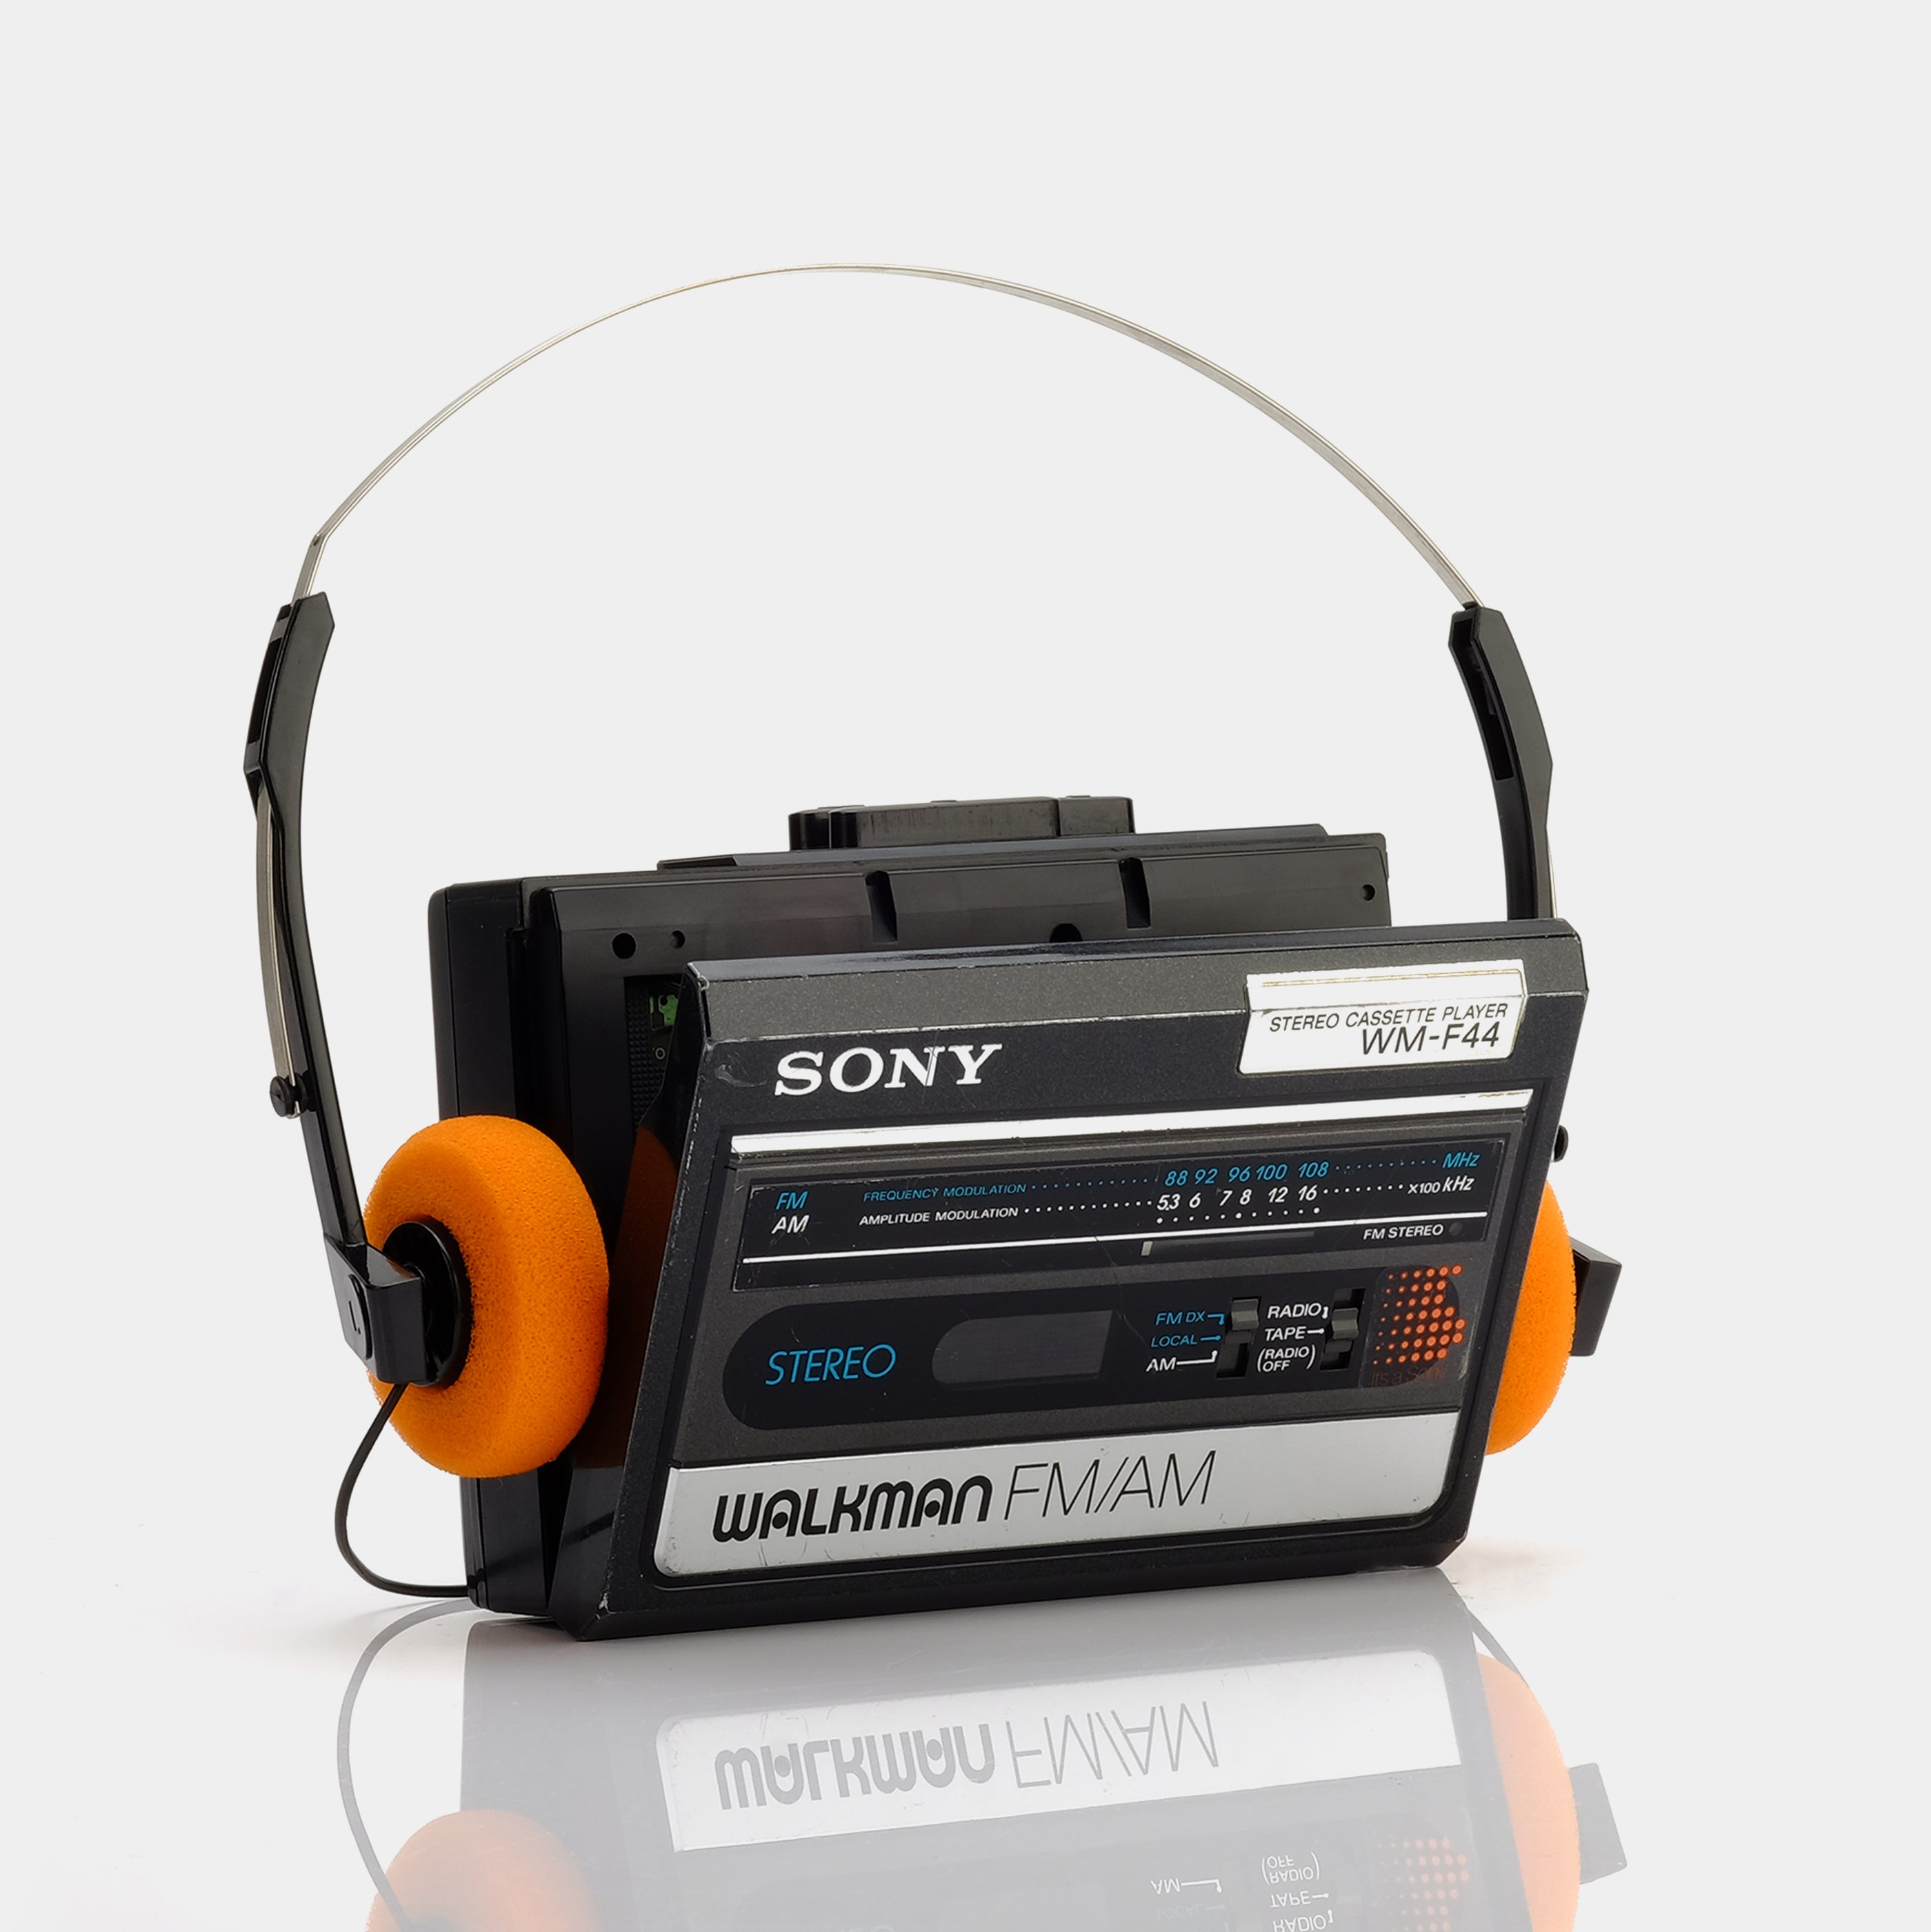 Sony Walkman WMF44 Portable Cassette Player